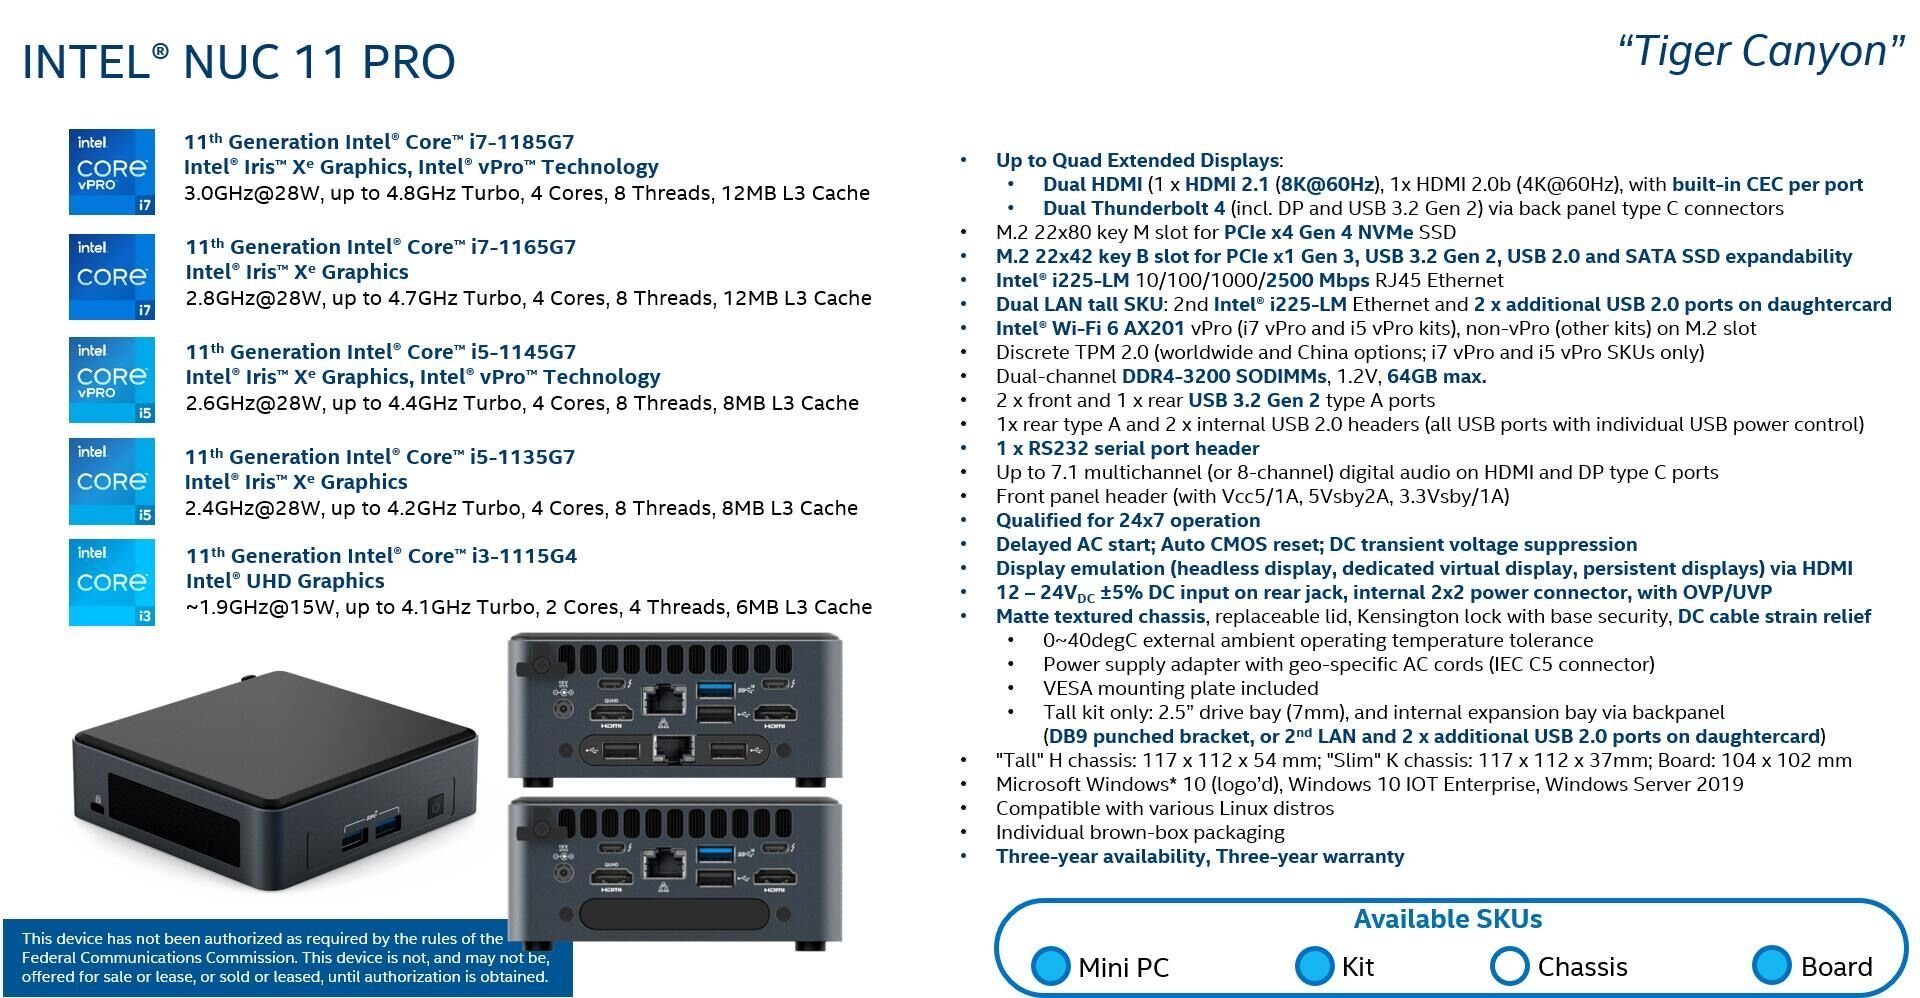 Intel NUC 11 Core i7-1165G7 11th Gen kit Mini PC with Processor